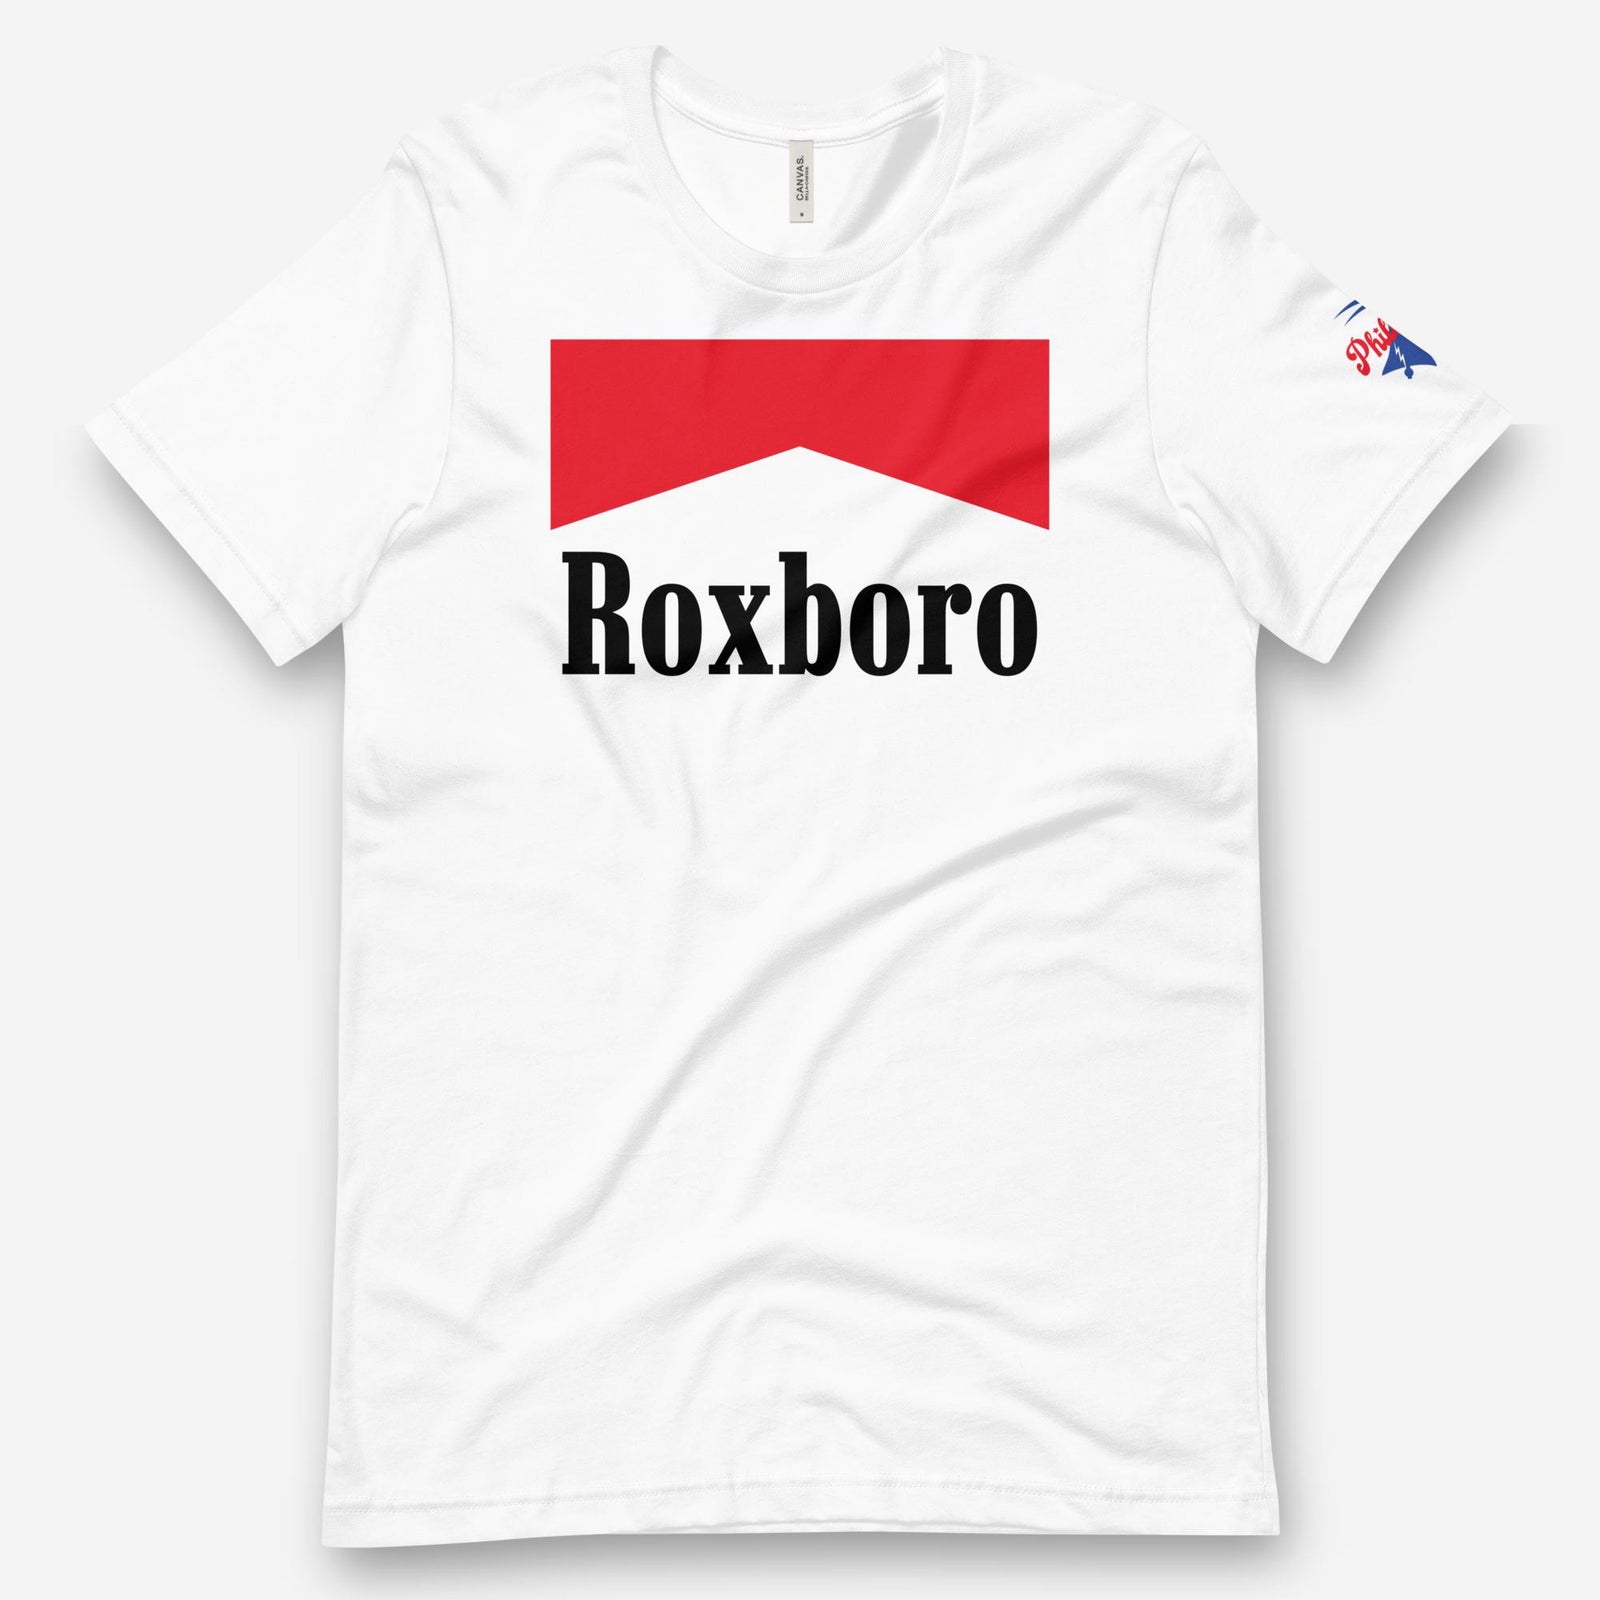 "Roxboro Smokes" Tee